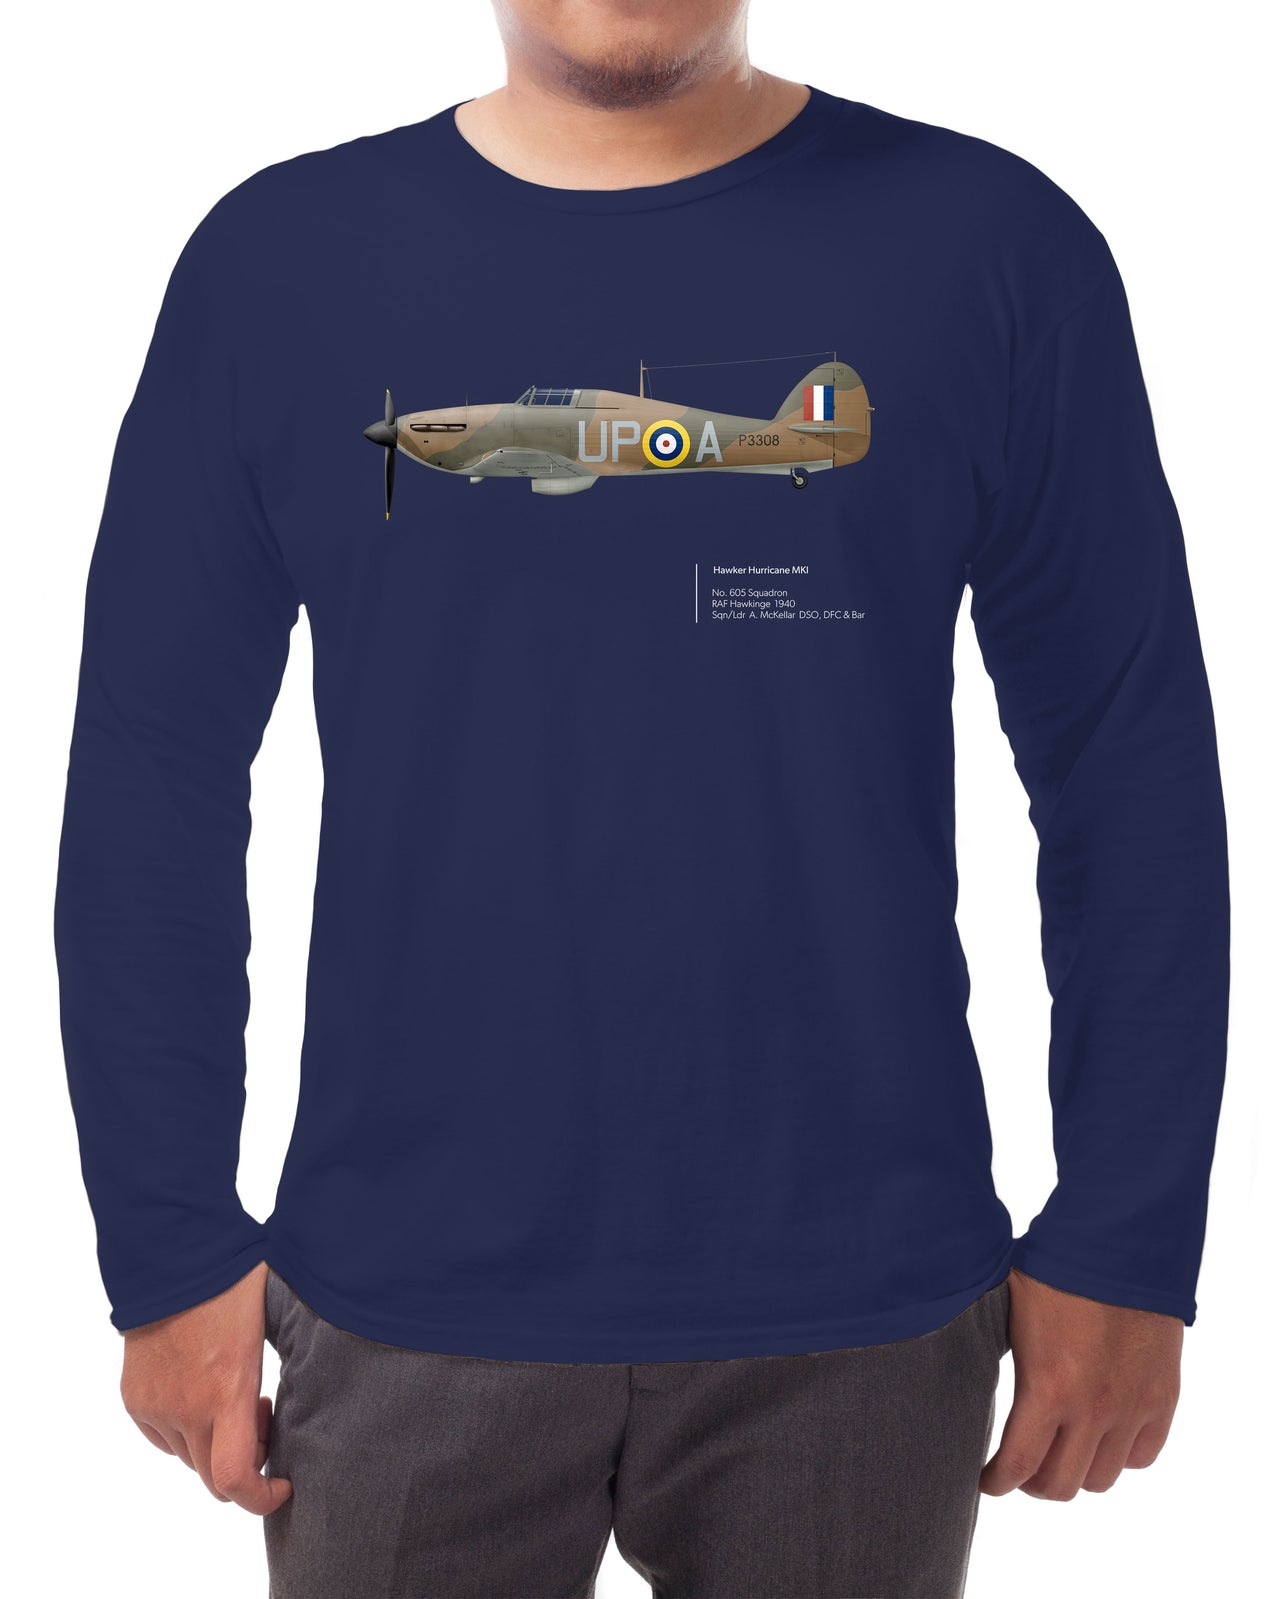 Hurricane 605SQN - Long-sleeve T-shirt